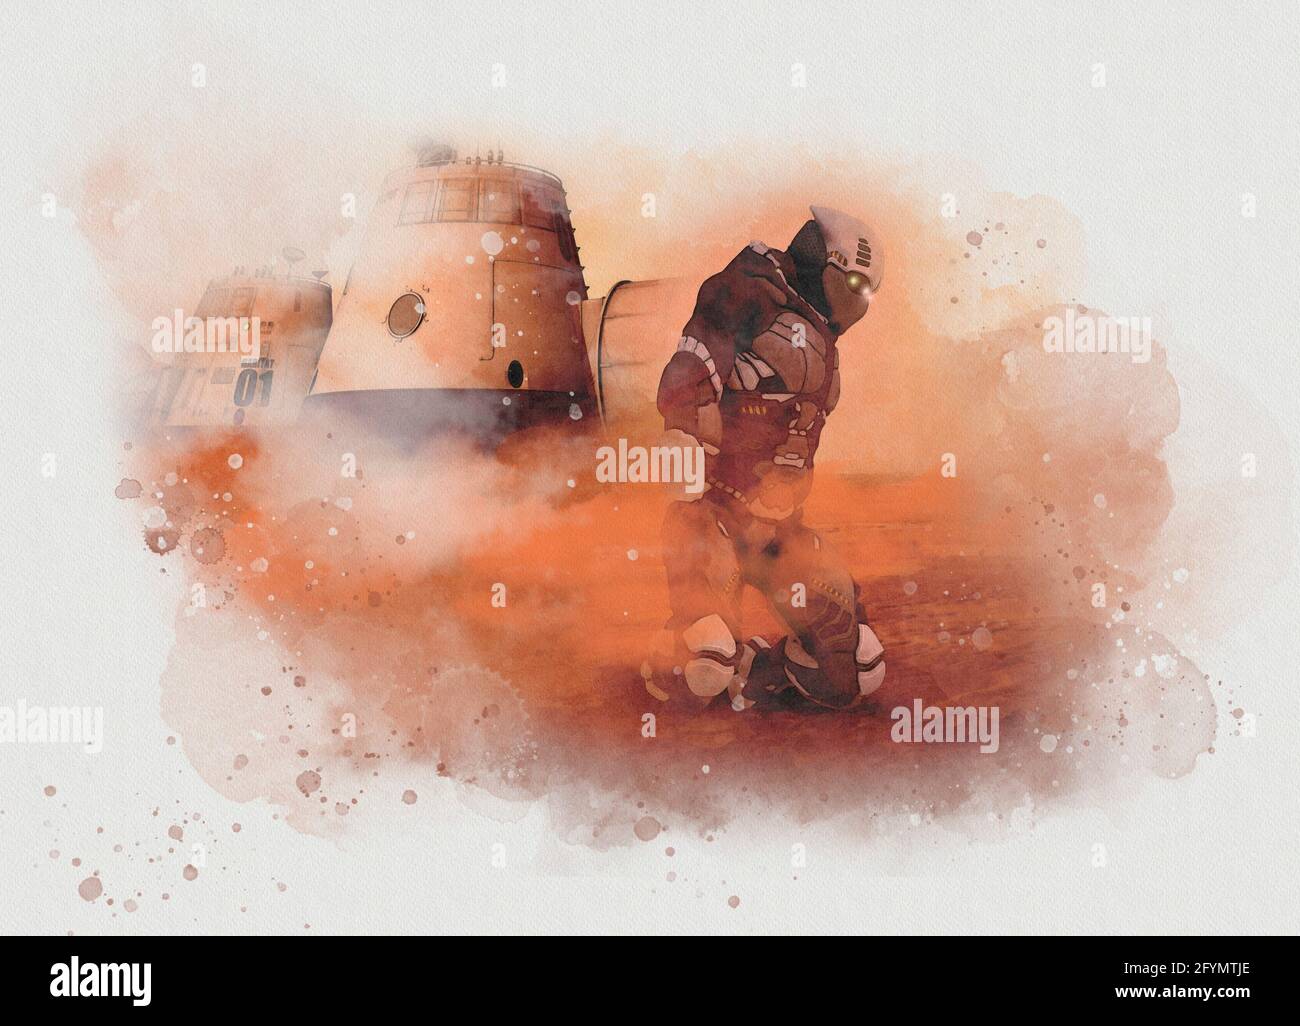 Life on Mars, conceptual illustration Stock Photo